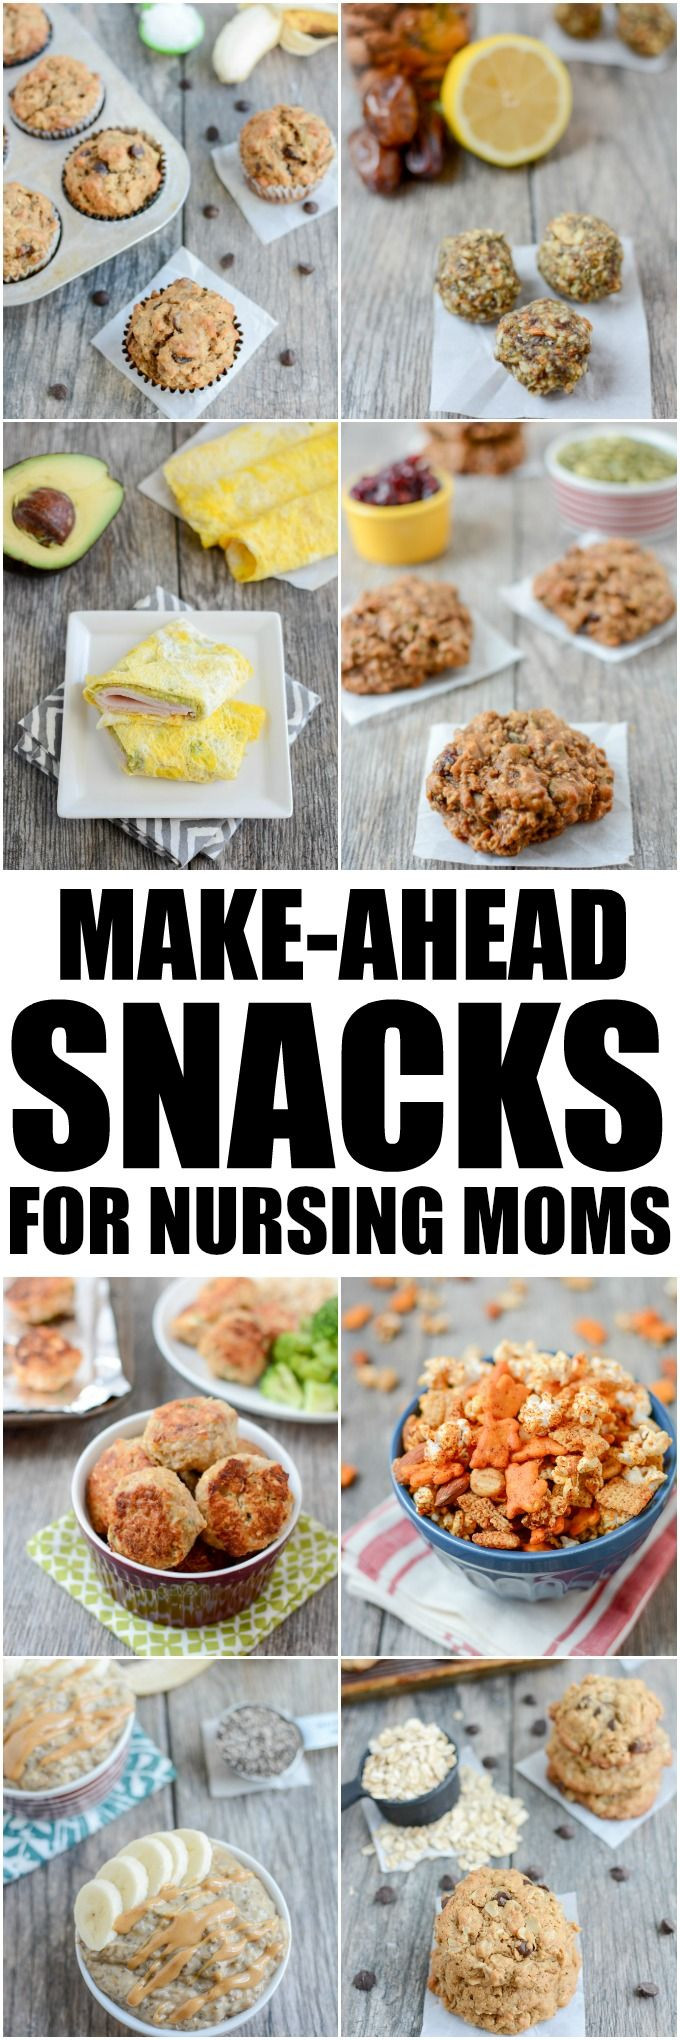 Healthy Snacks While Breastfeeding
 25 best ideas about Breastfeeding snacks on Pinterest